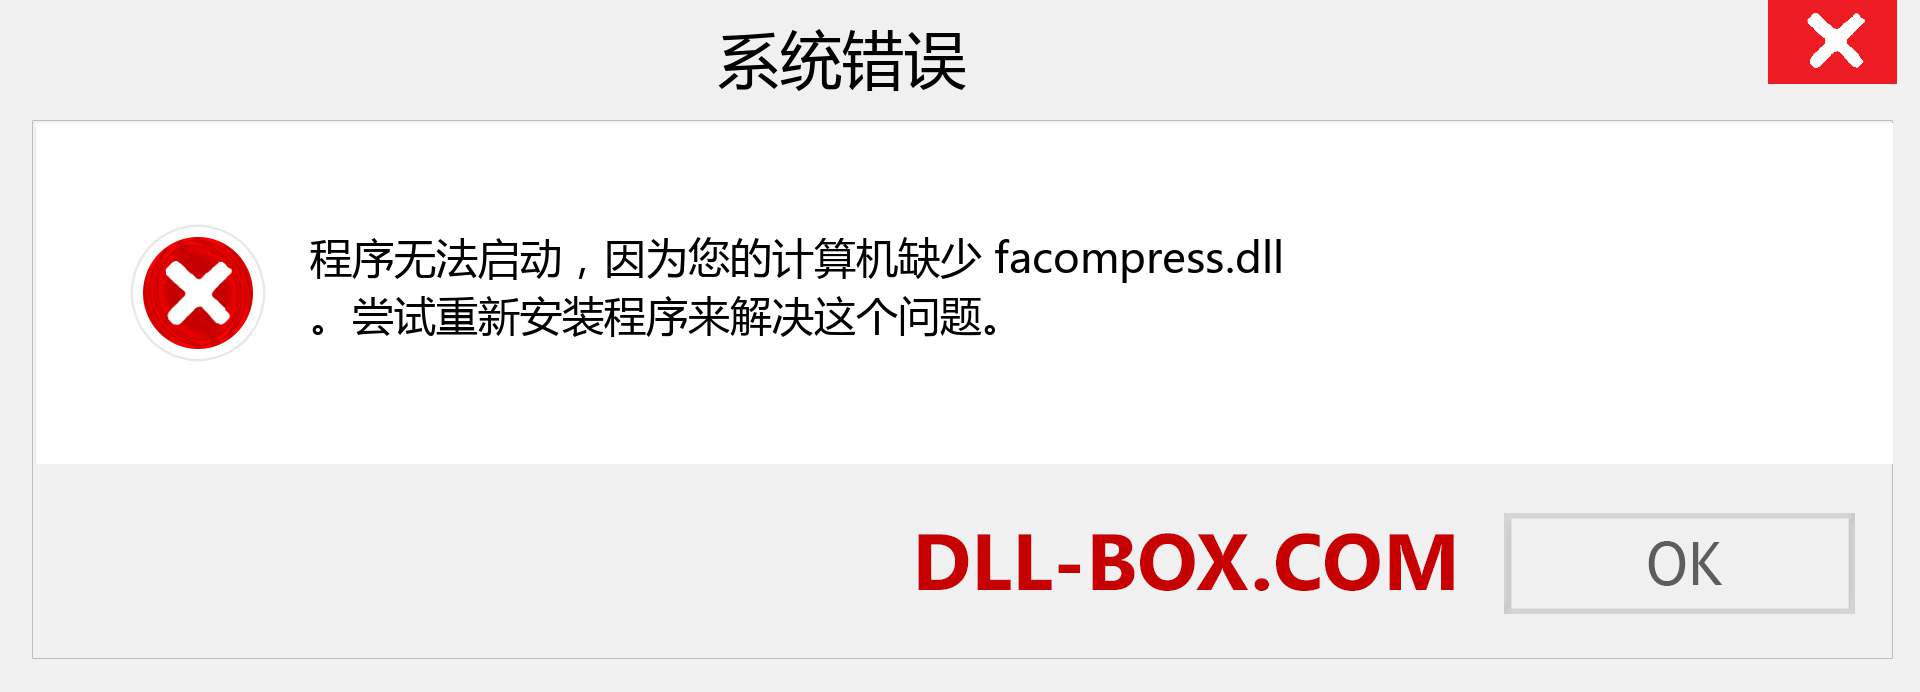 facompress.dll 文件丢失？。 适用于 Windows 7、8、10 的下载 - 修复 Windows、照片、图像上的 facompress dll 丢失错误